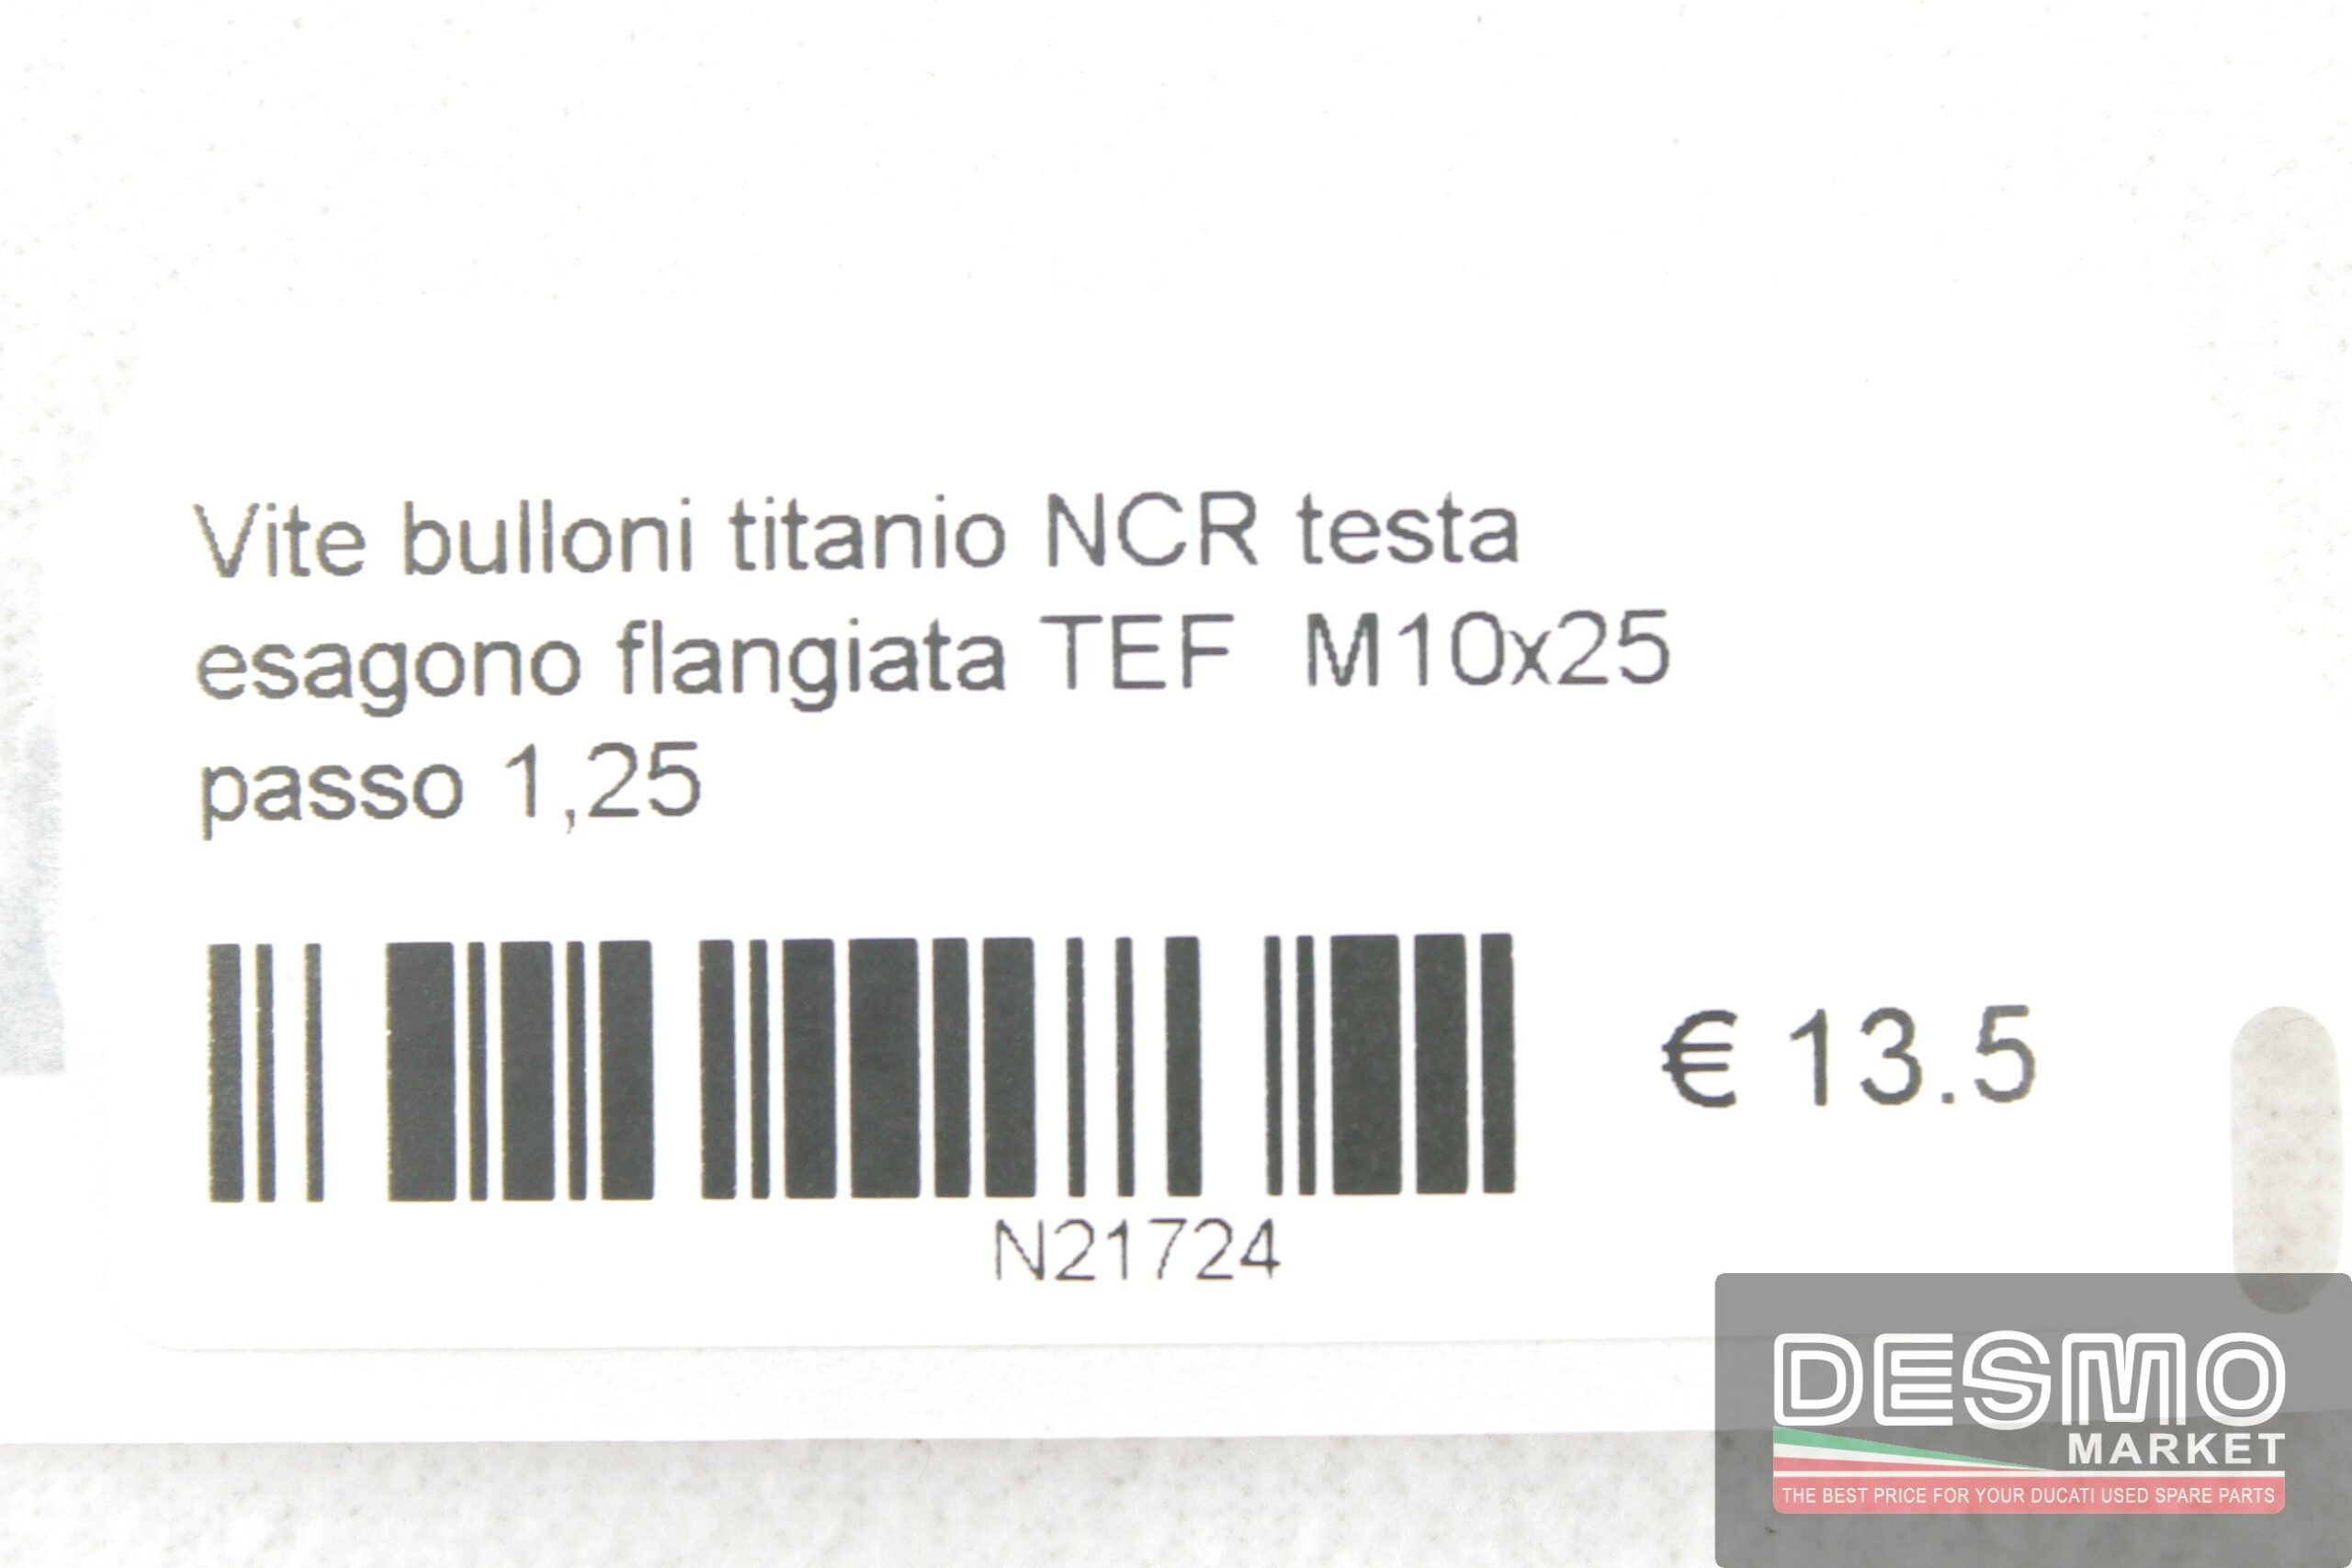 Vite bulloni titanio NCR testa esagono flangiata TEF  M10x25 passo 1,25